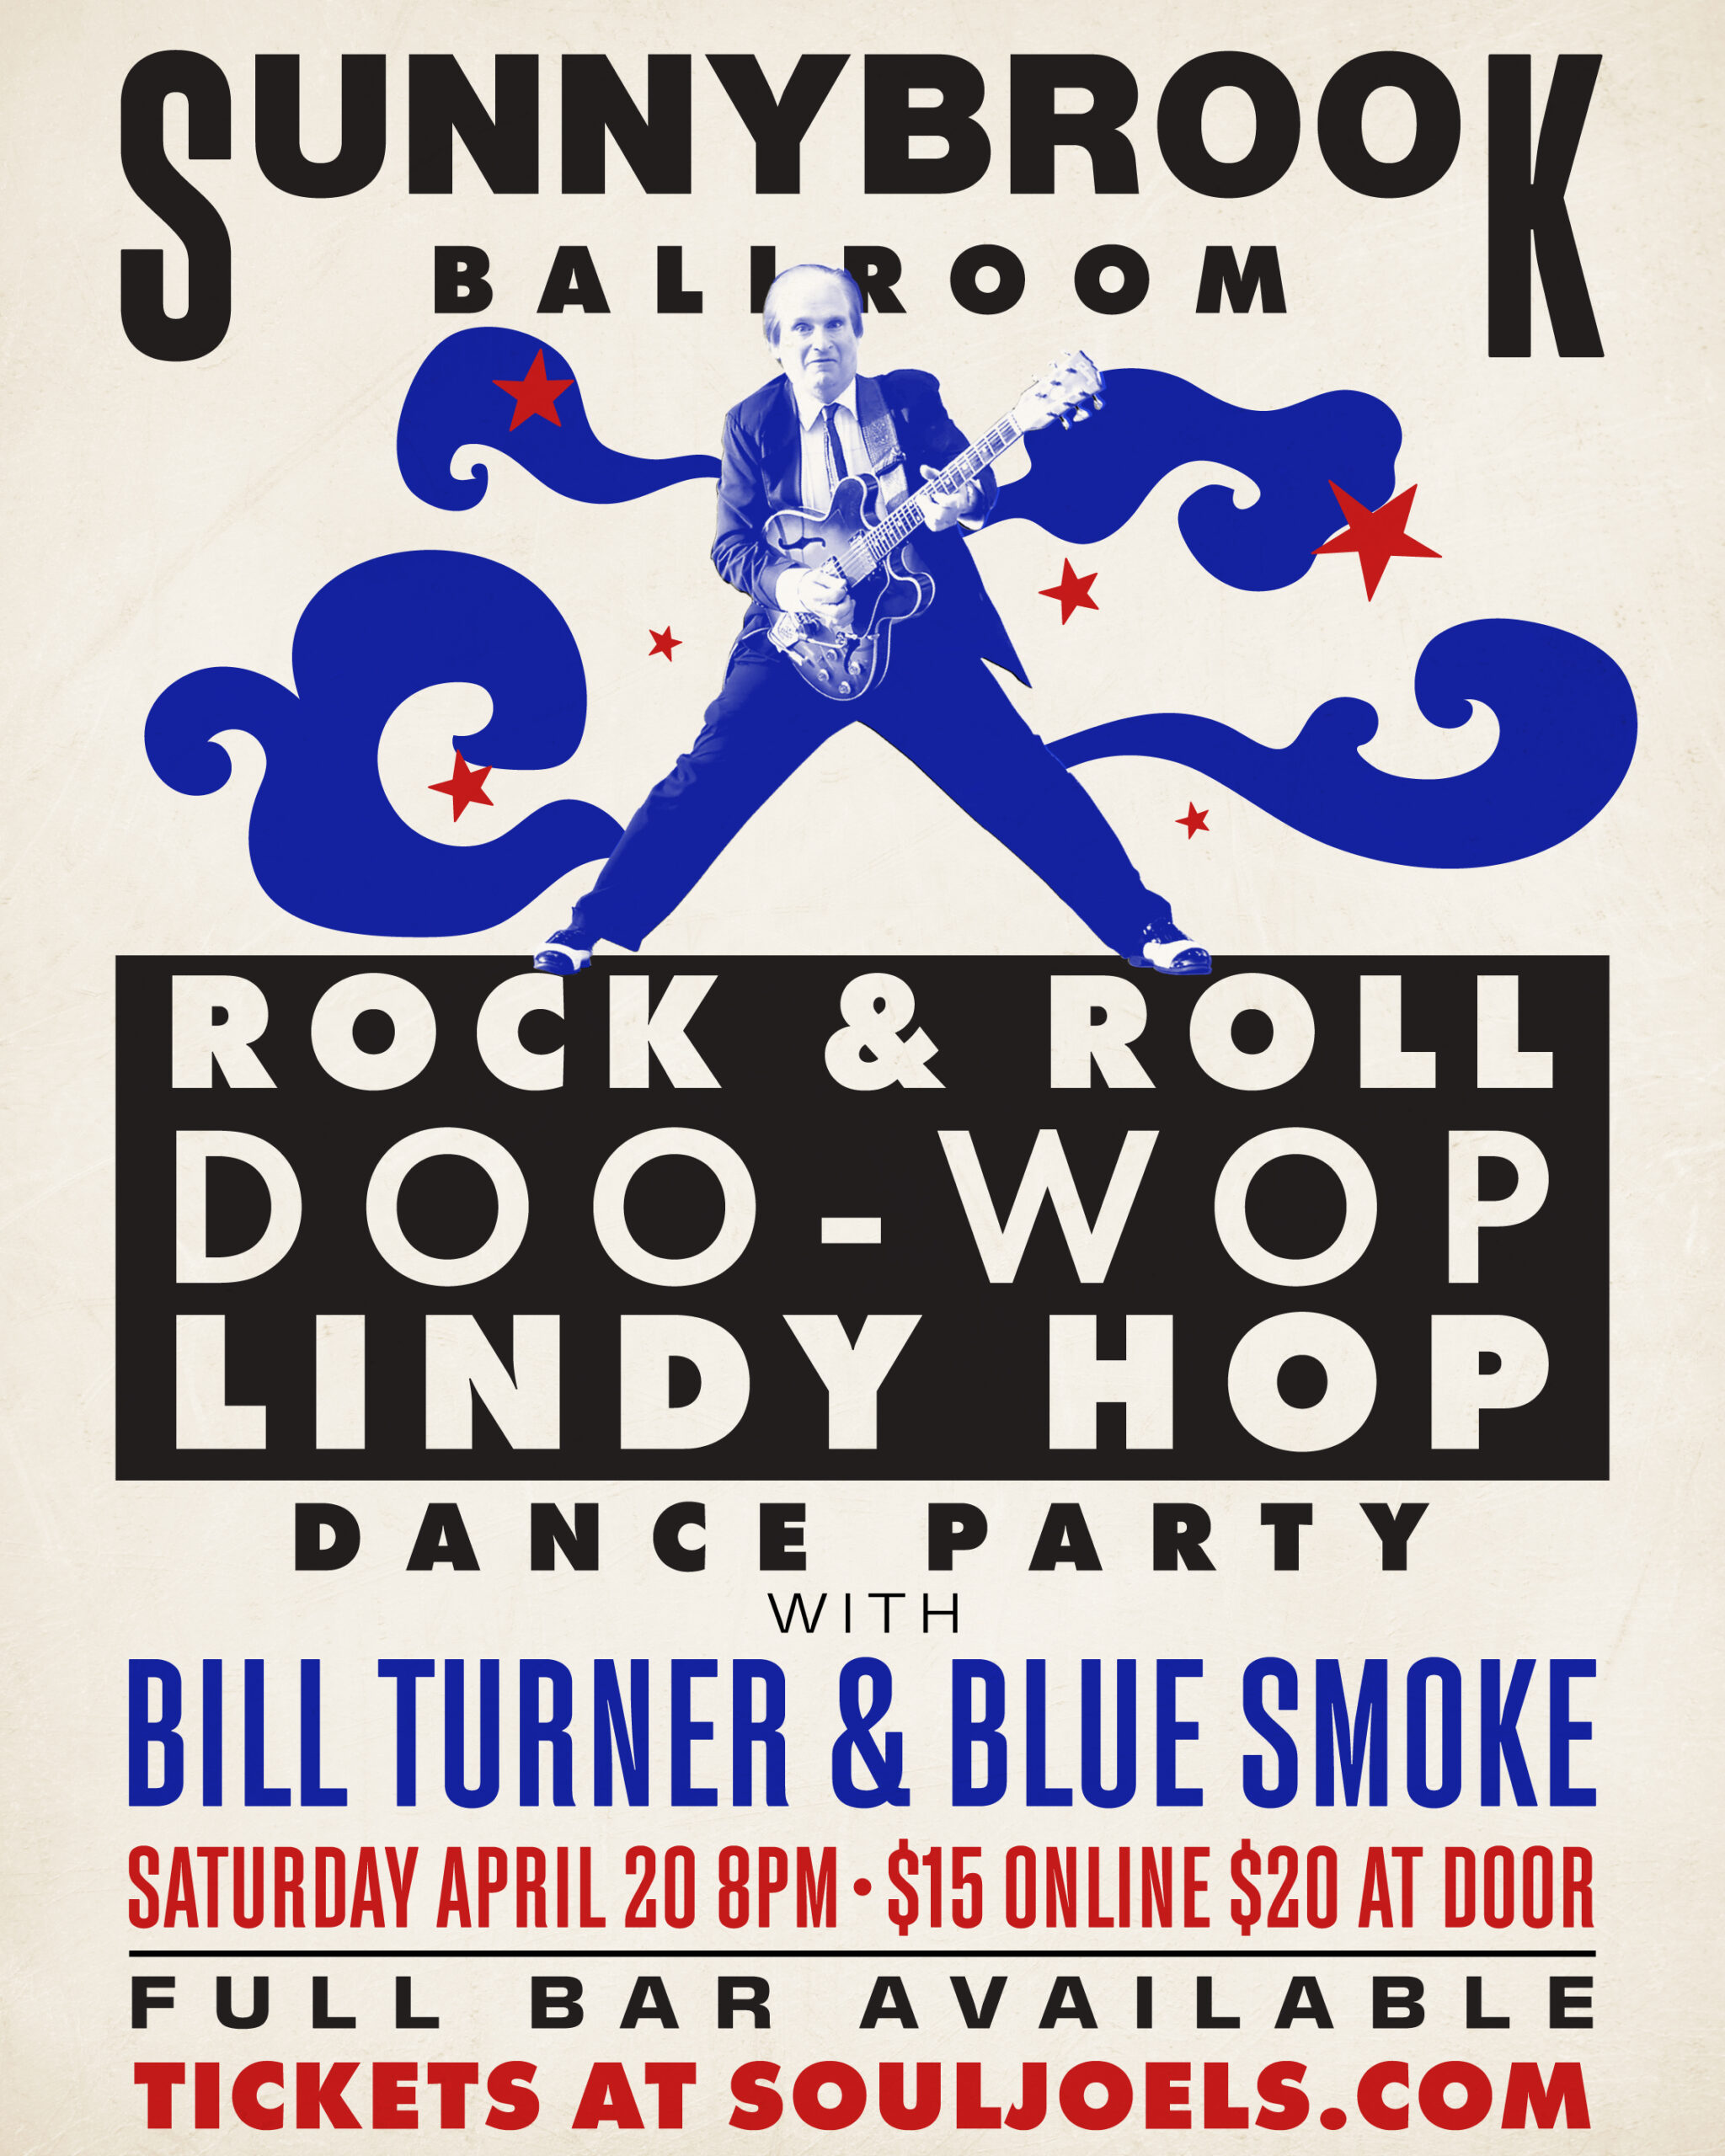 Bill Turner & Blue Smoke